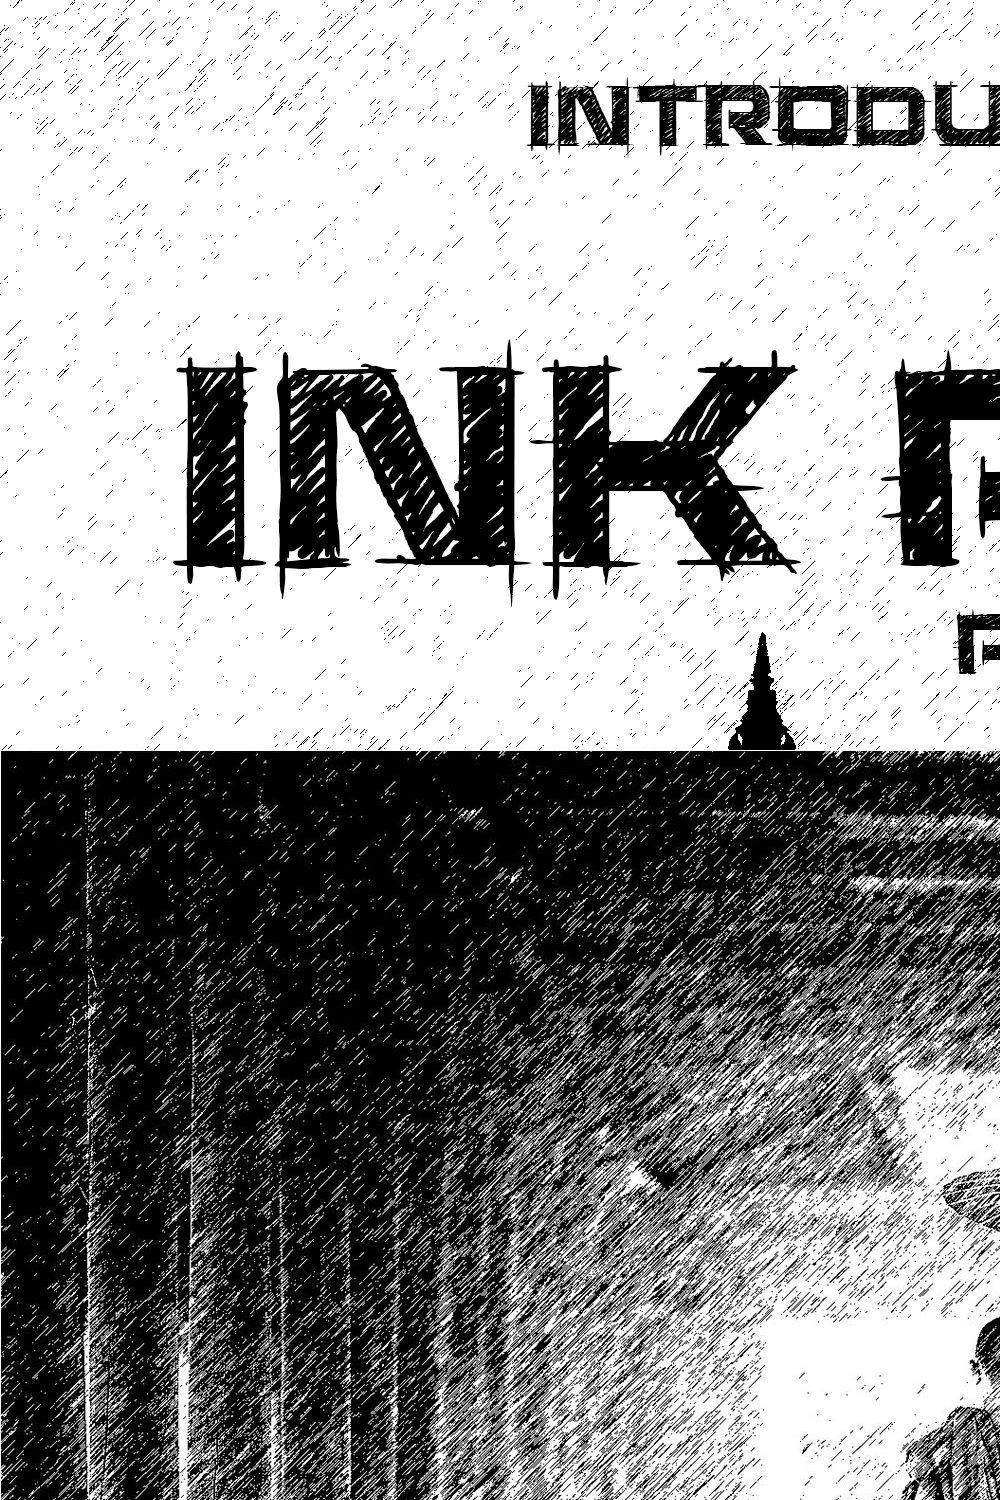 Ink Pen Photoshop Action pinterest preview image.